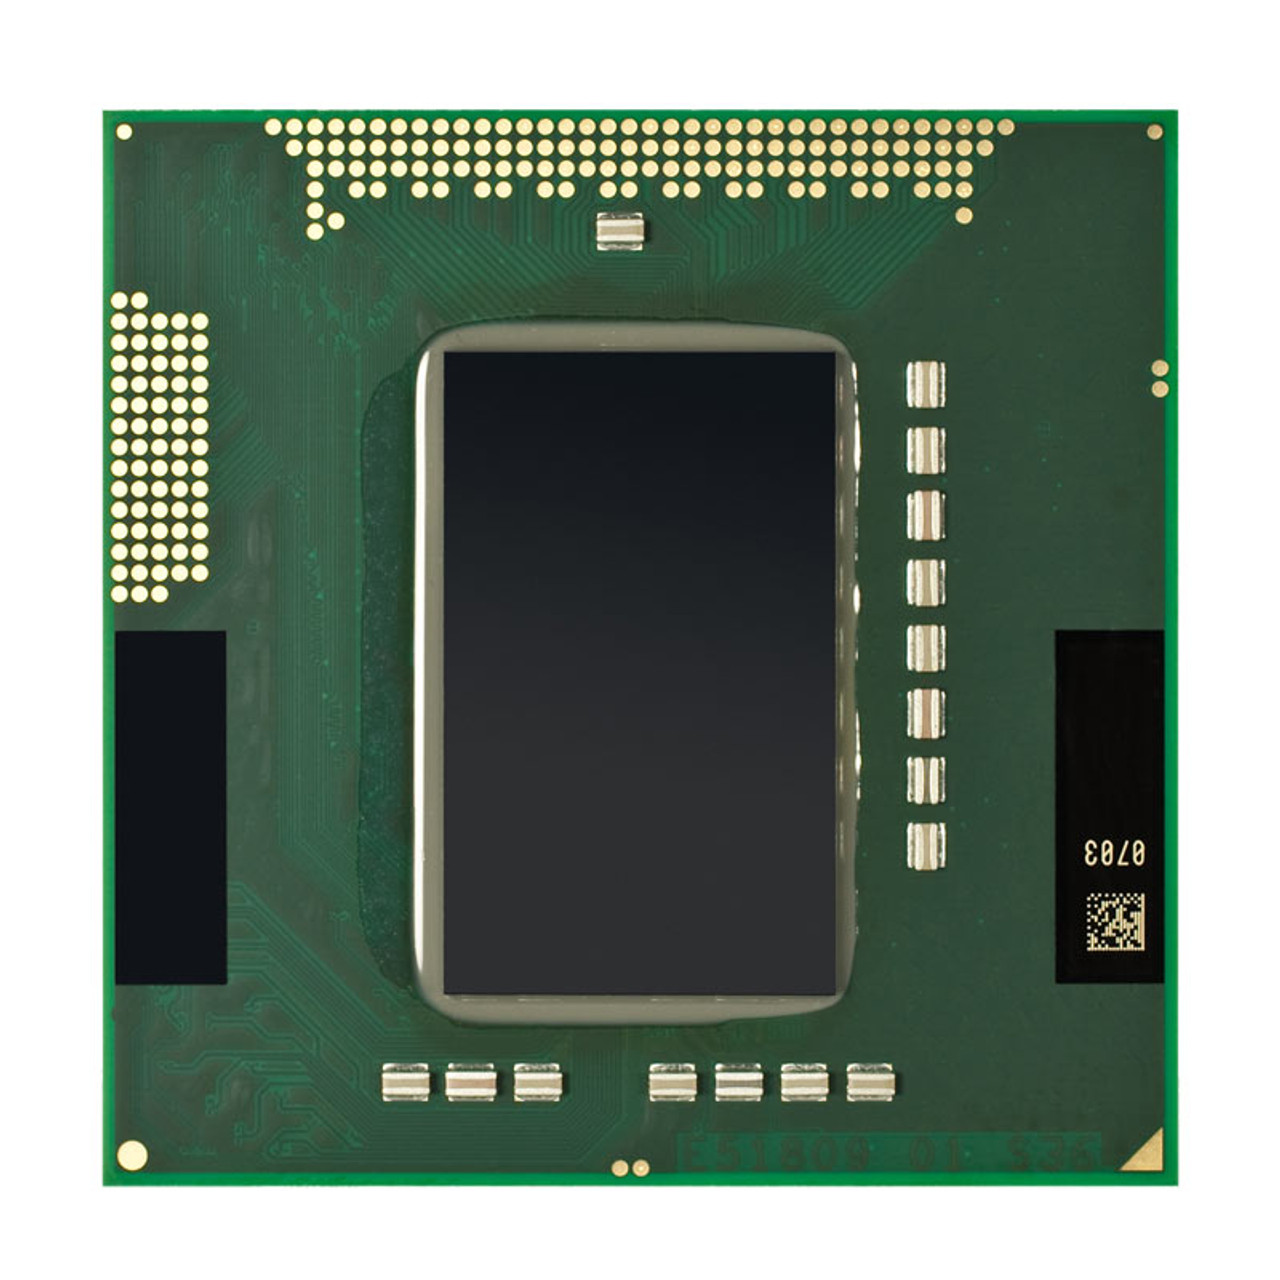 SLBTR Intel Core i7-620M Dual-Core 2.66GHz 2.50GT/s DMI 4MB L3 Cache Socket BGA1288 Mobile Processor